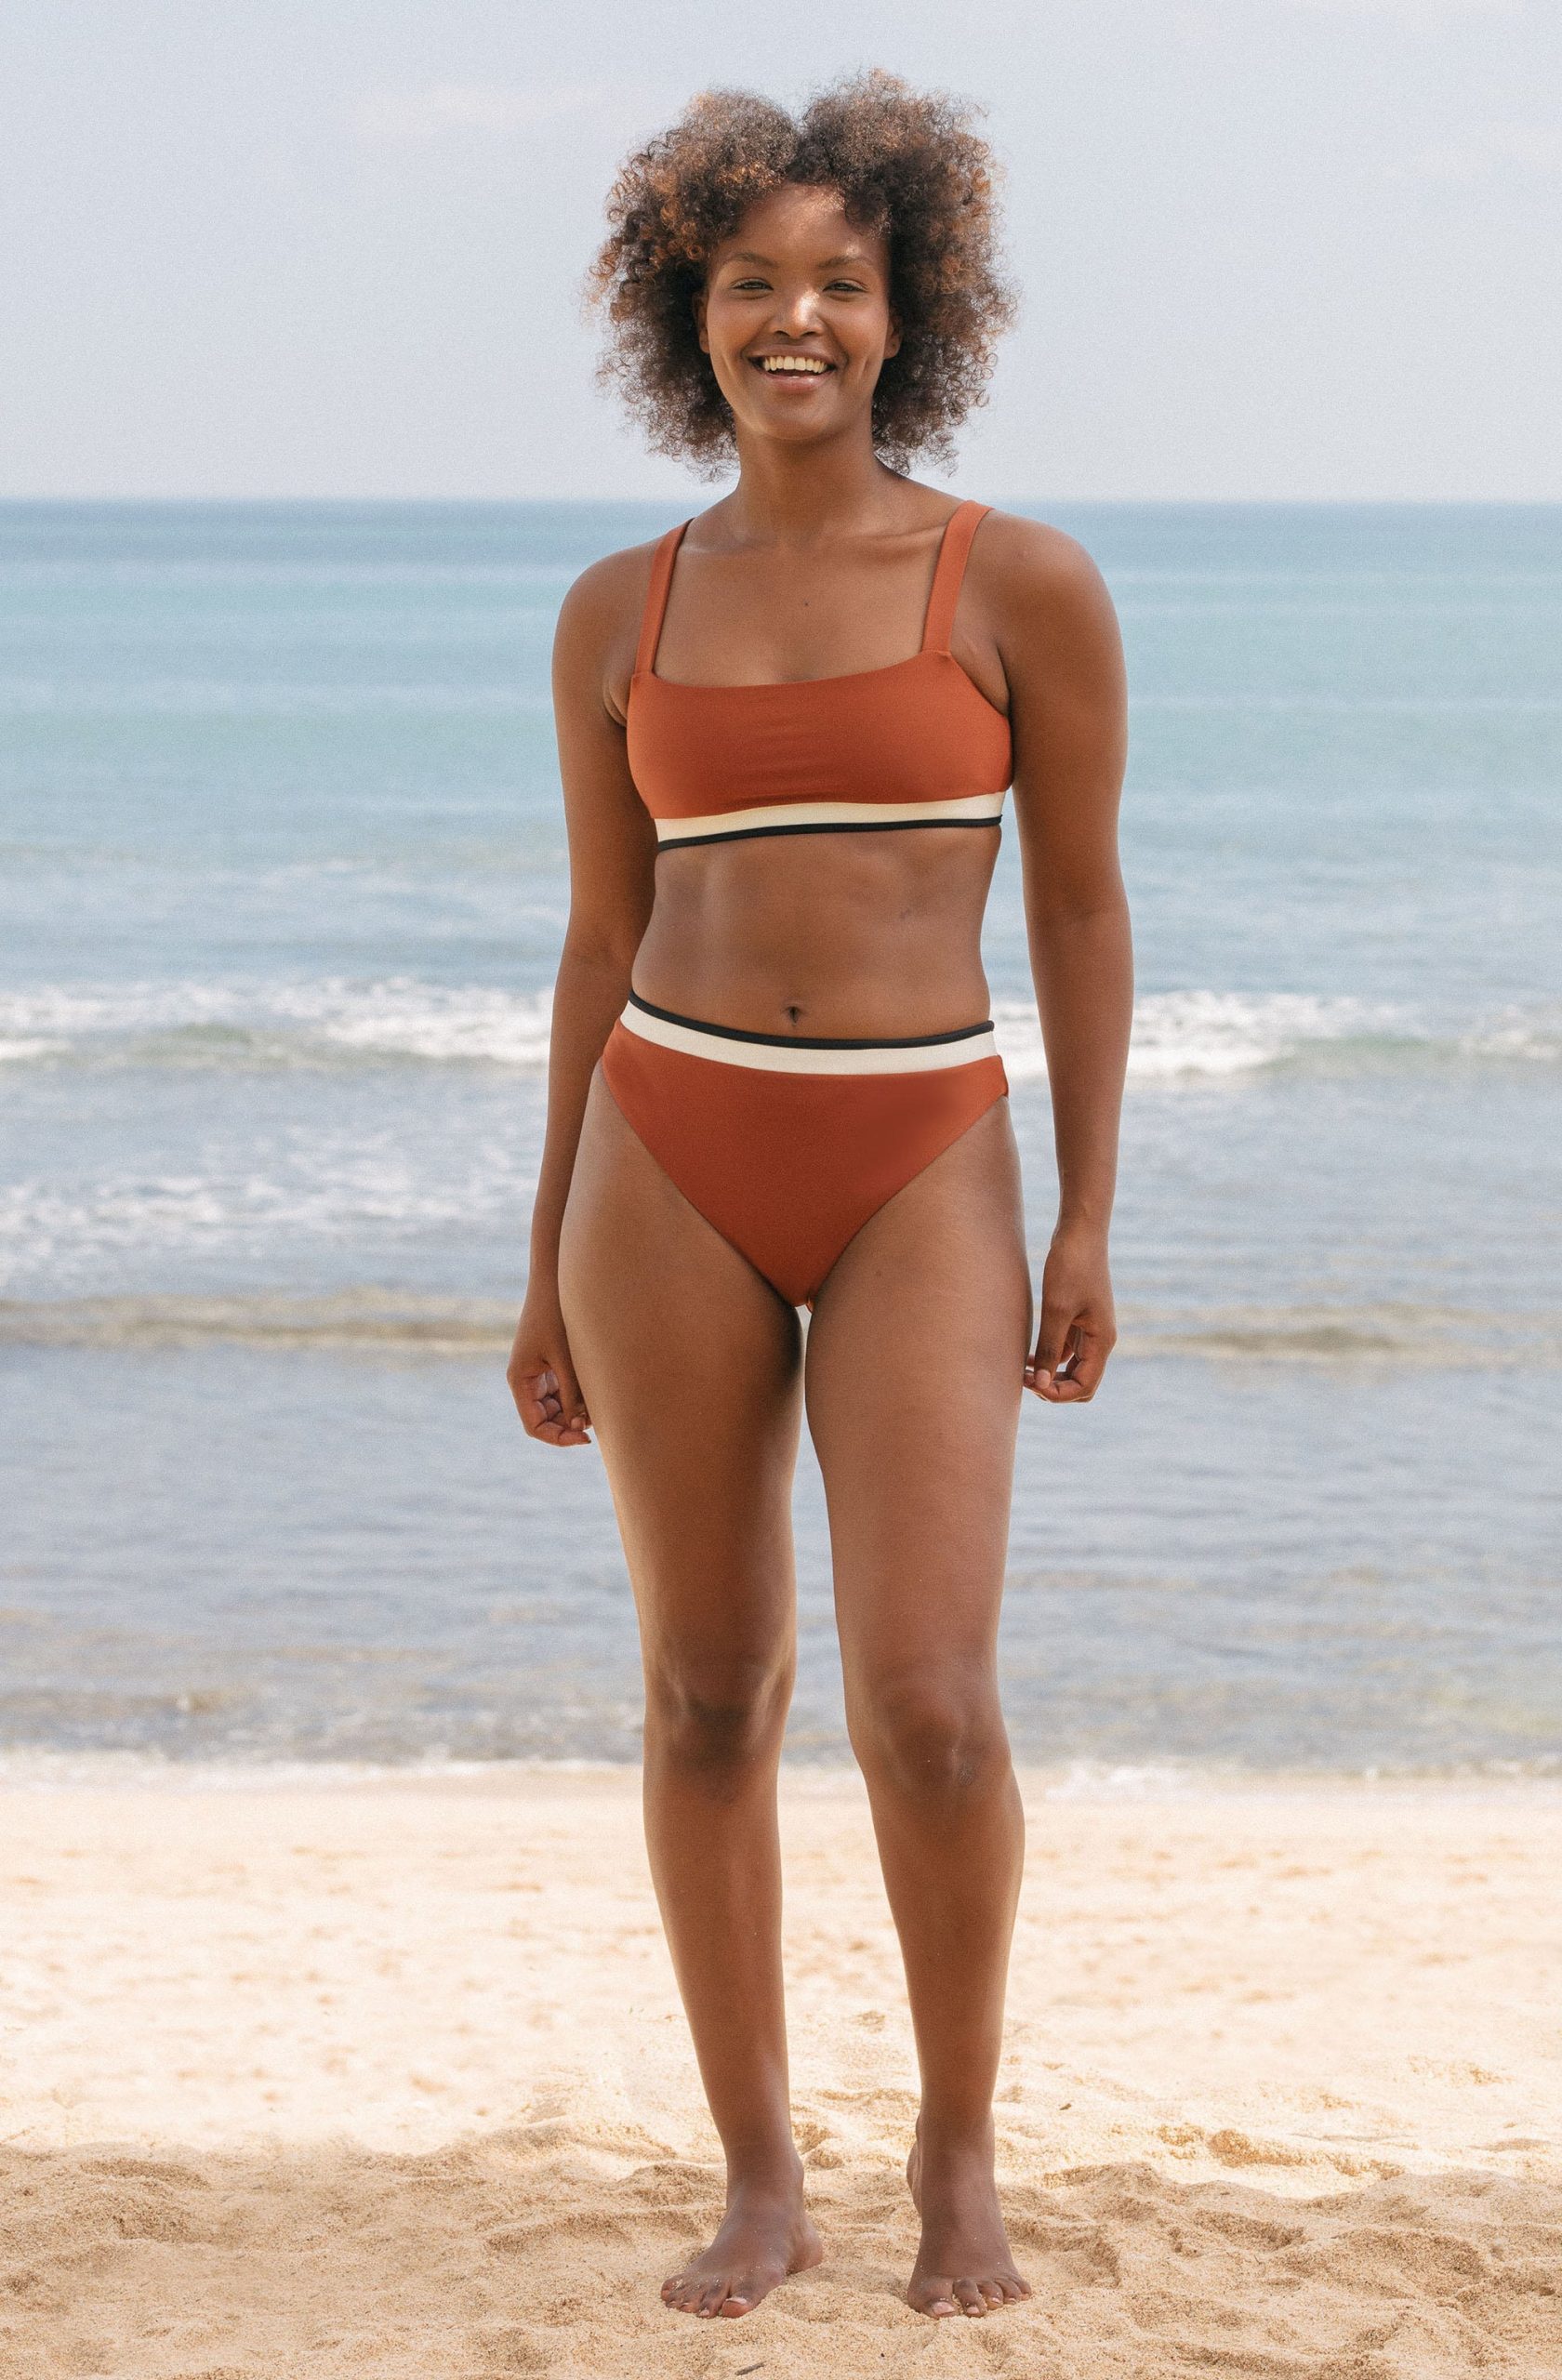 Person wearing SEPTEMBER swimwear on the beach